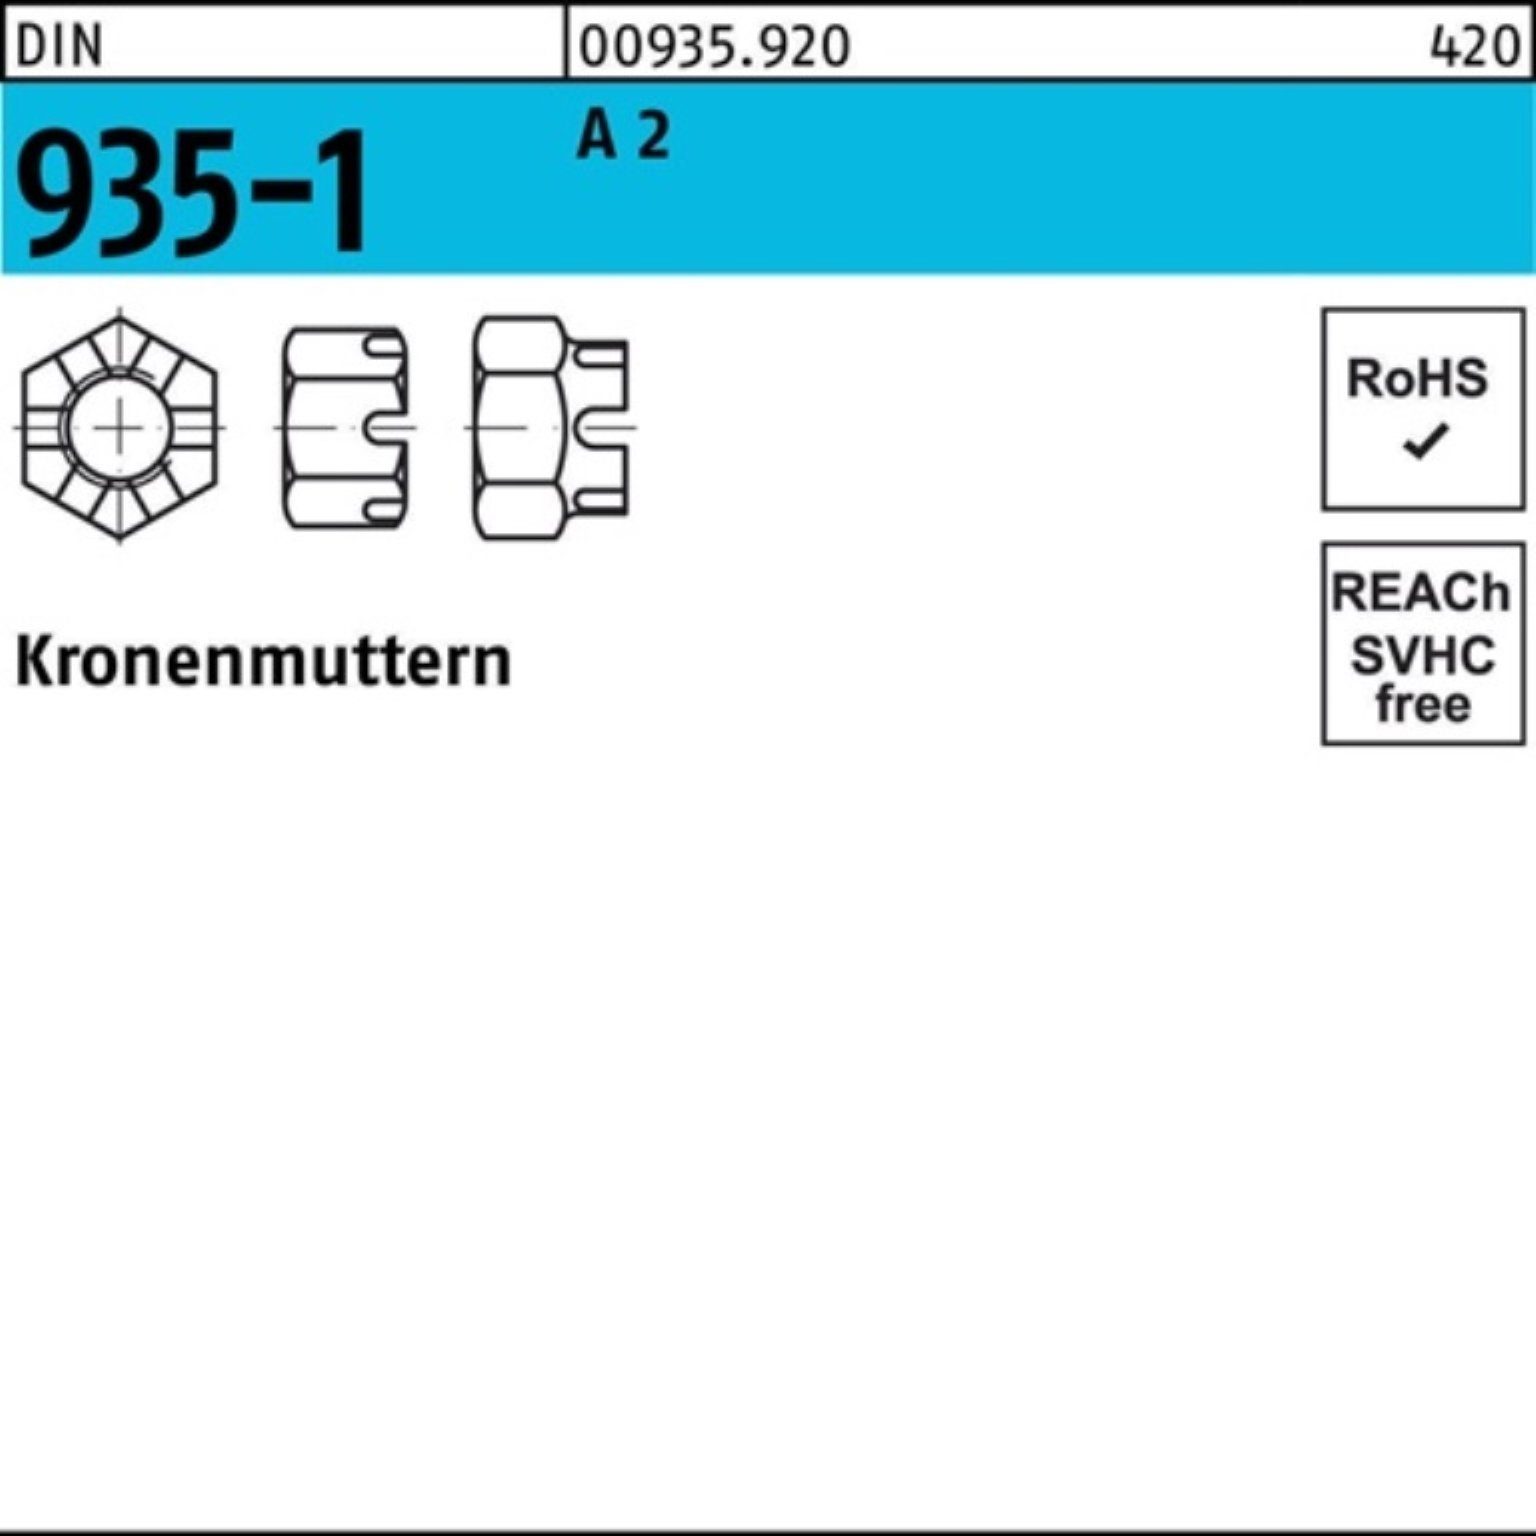 Reyher Kronenmutter 100er Pack Kronenmutter DIN 935-1 M6 A 2 50 Stück DIN 935-1 A 2 Krone